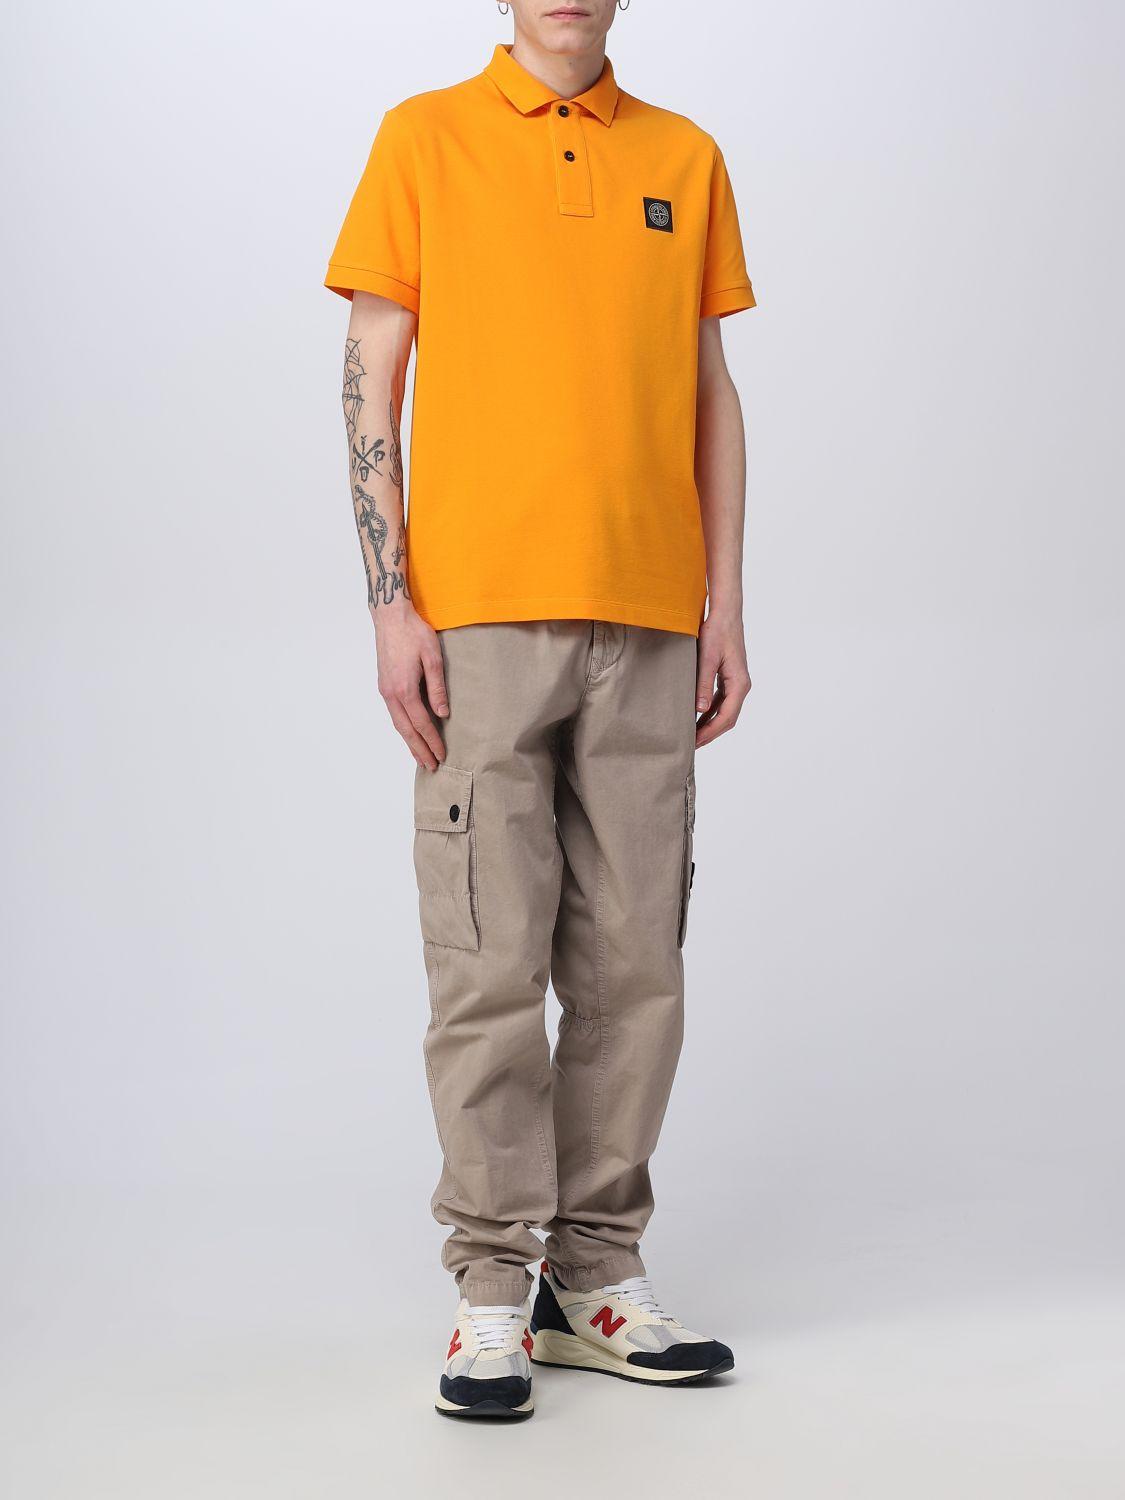 Stone Island Polo Shirt in Orange for Men | Lyst